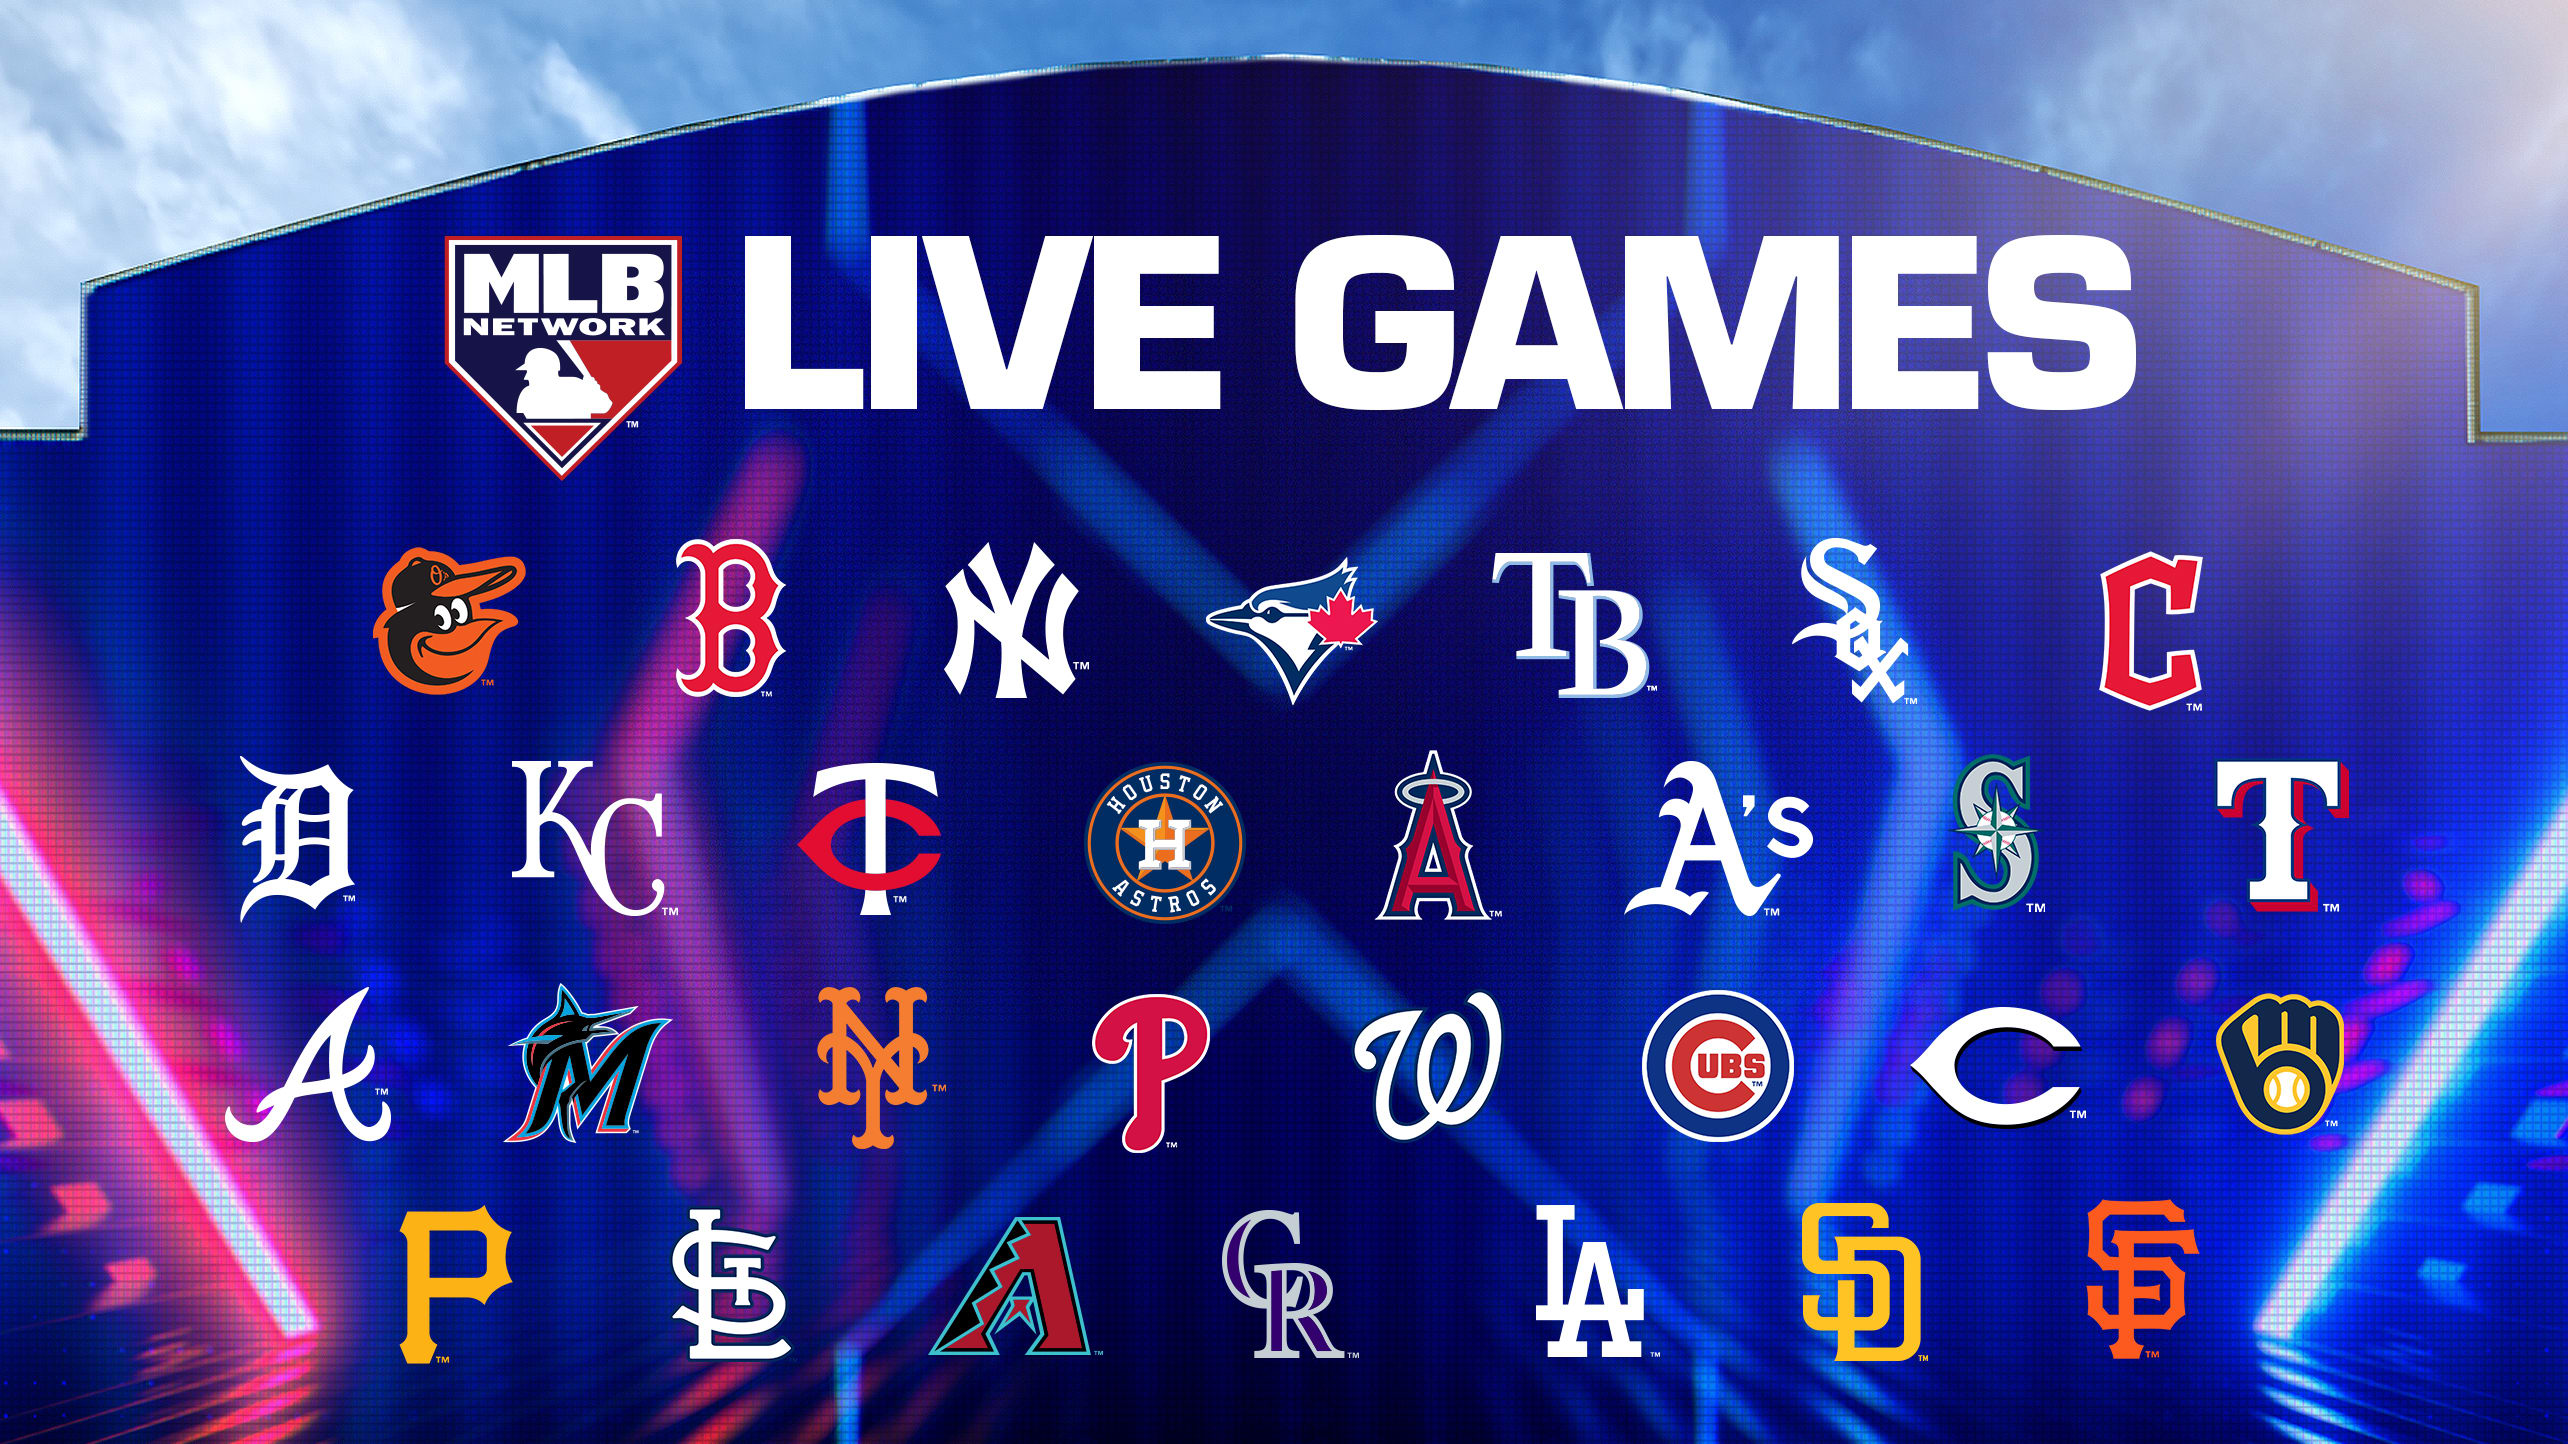 MLB Network live games